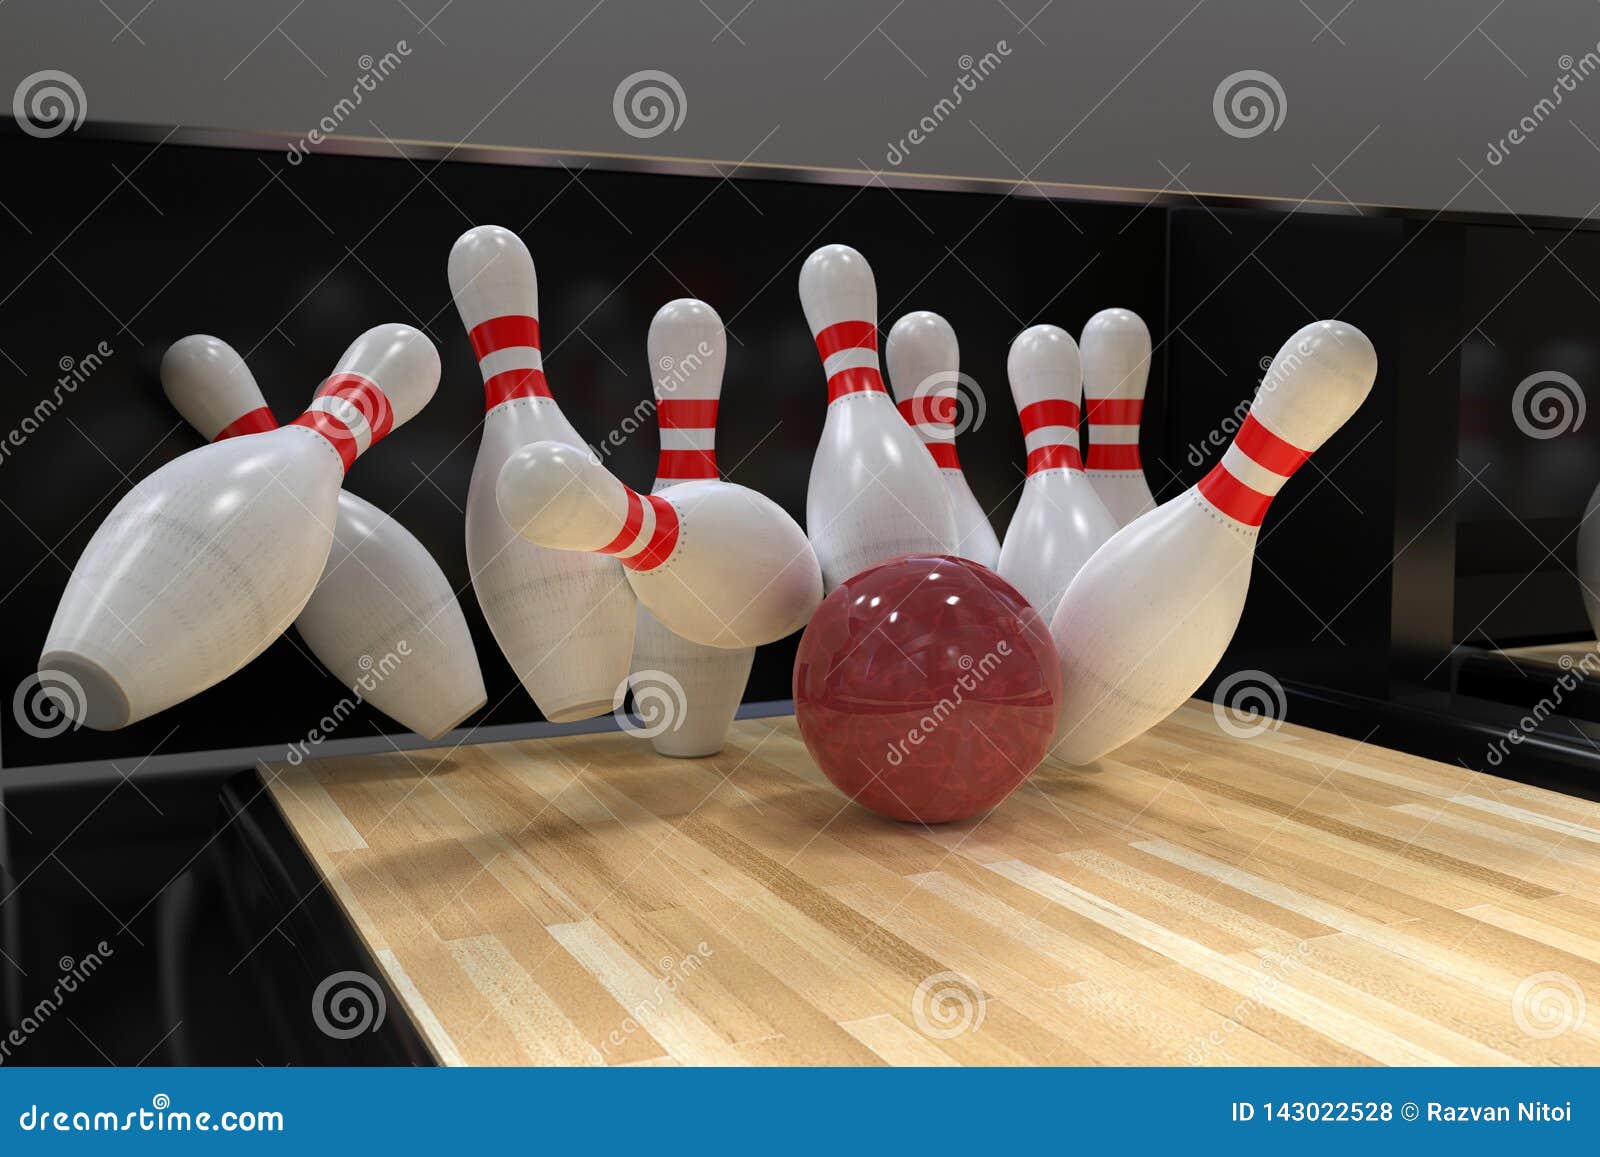 bowling ball hitting all 10 pins, in a strike